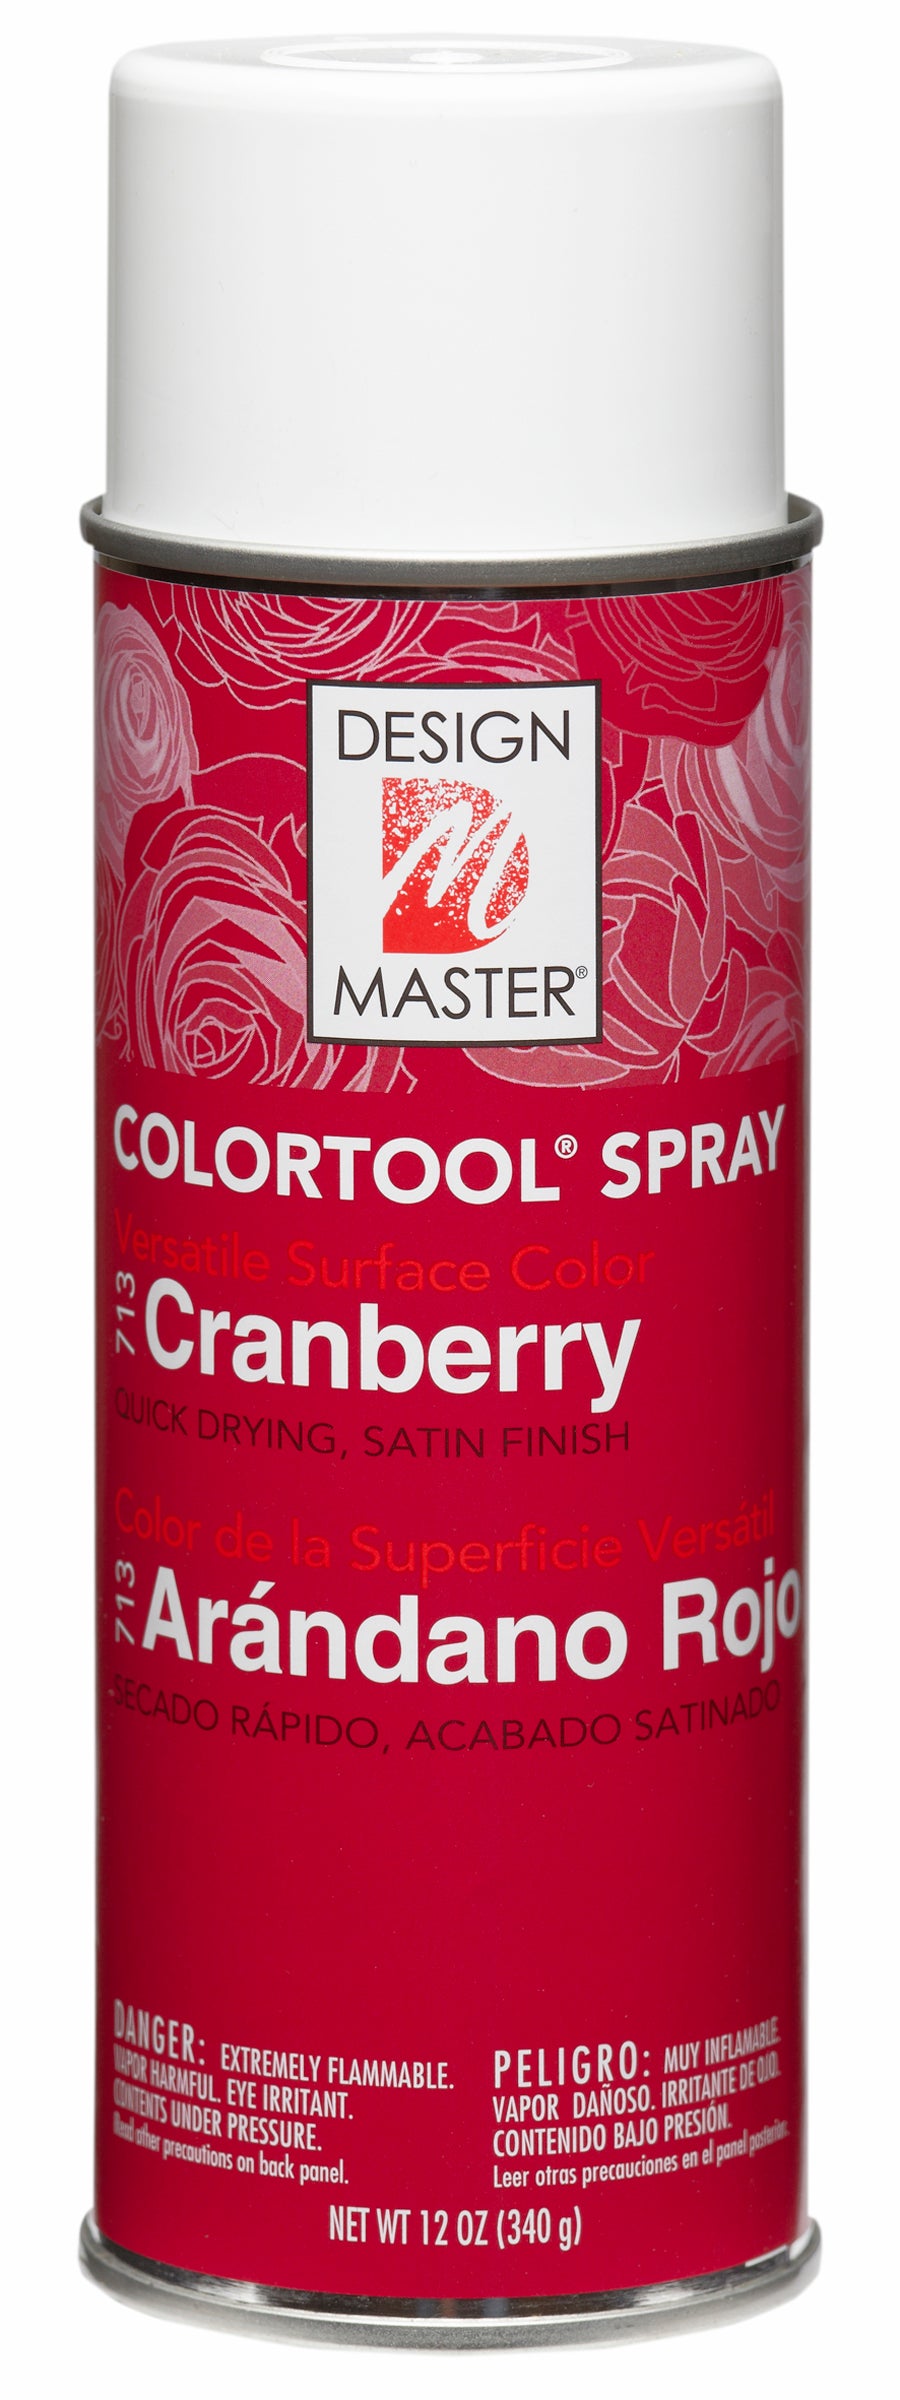 Design Master Colortool Spray-Cranberry